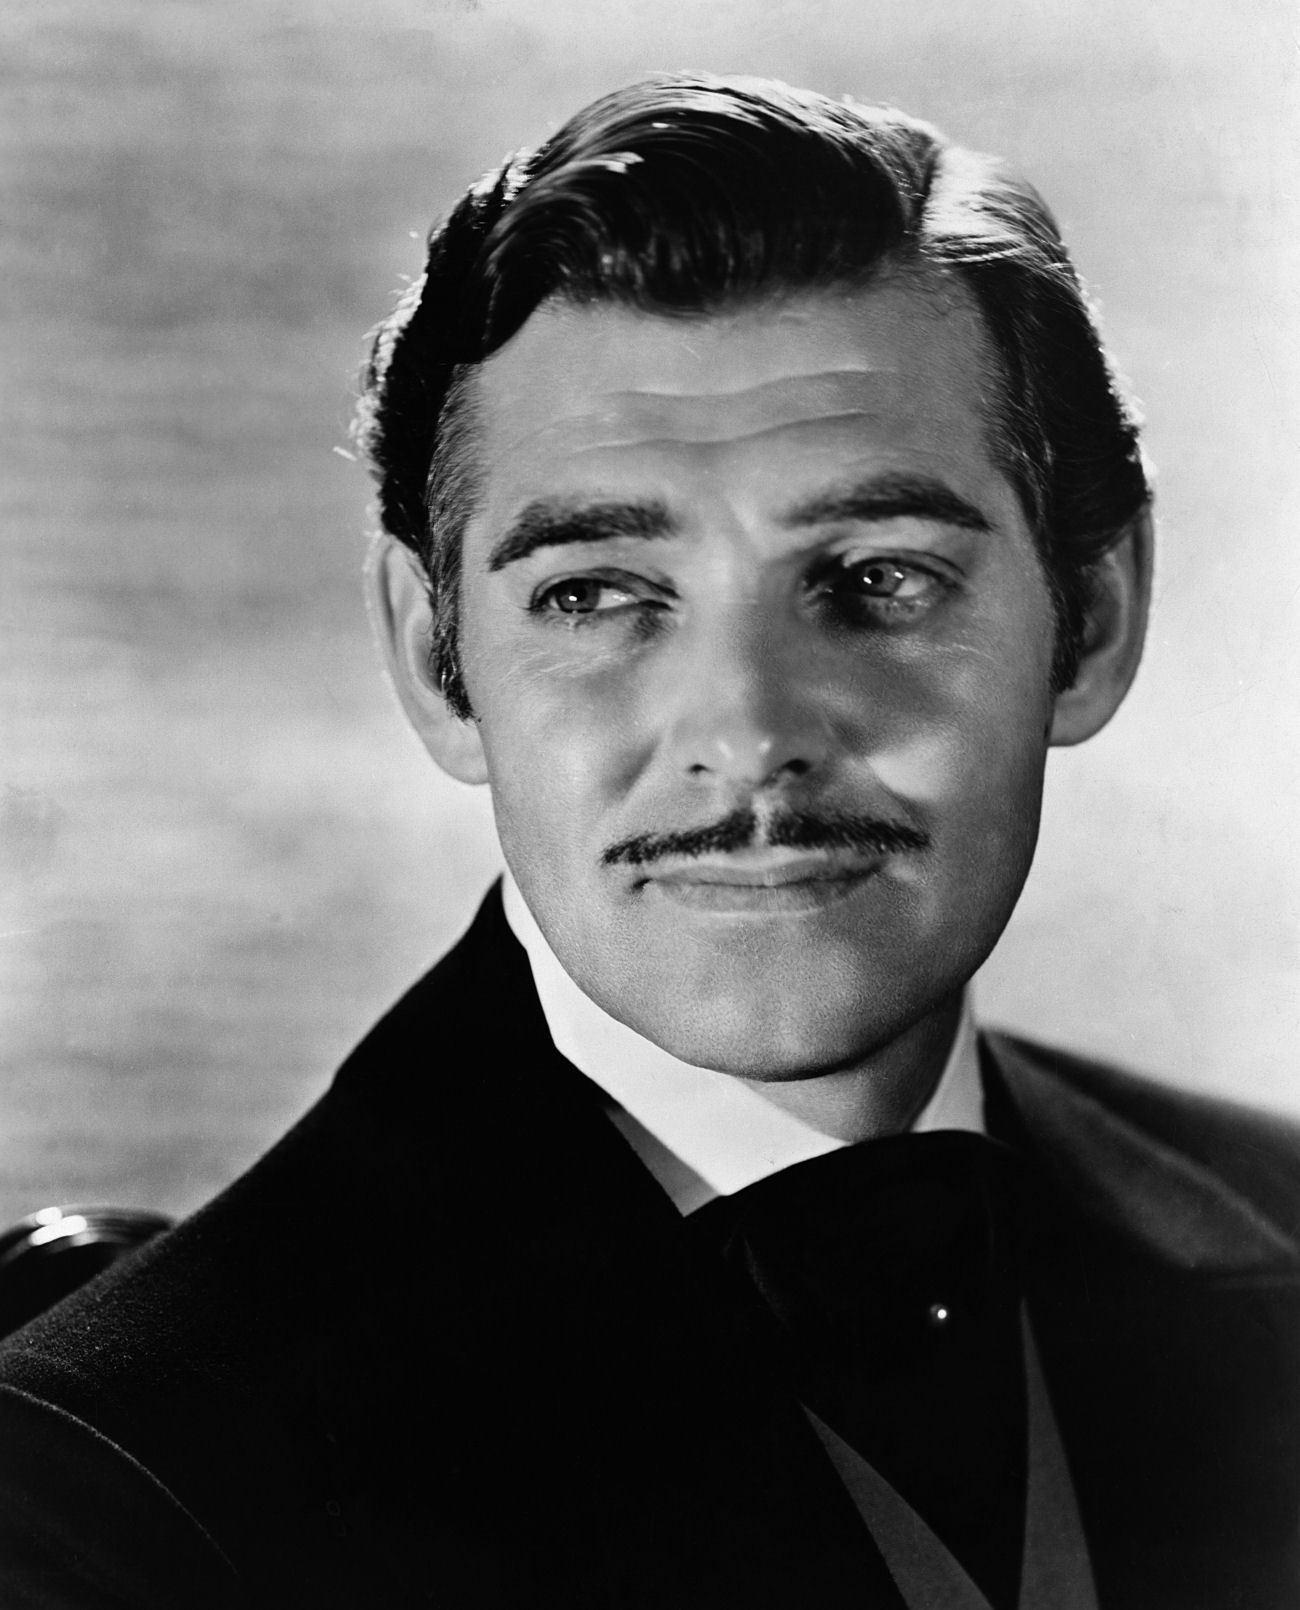 Clark Gable as Rhett Butler Gone With The Wind, 1939 Absolutely